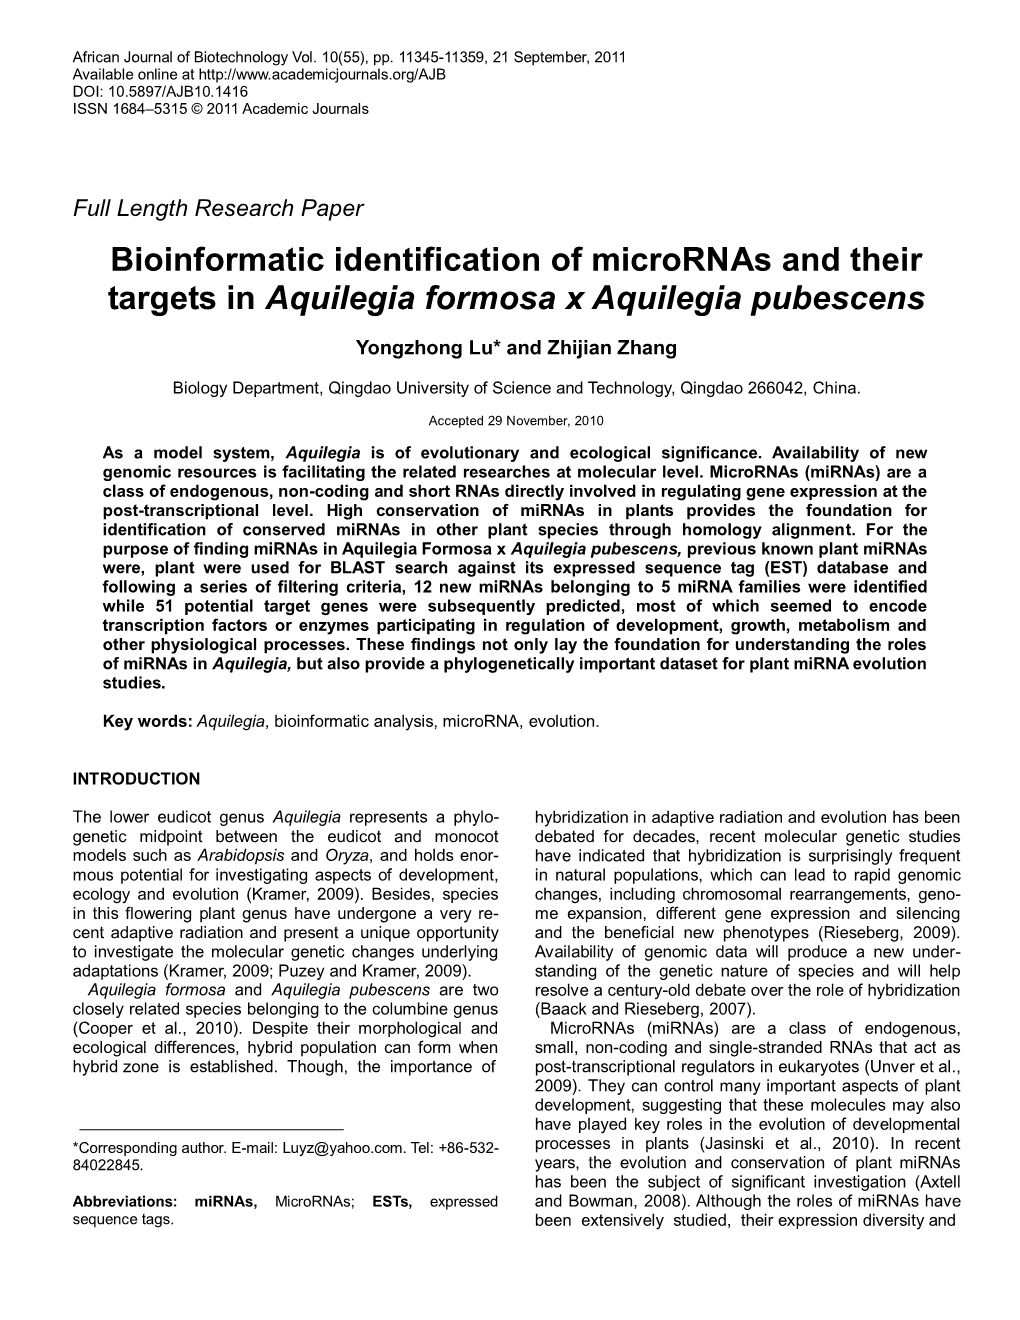 Bioinformatic Identification of Micrornas and Their Targets in Aquilegia Formosa X Aquilegia Pubescens